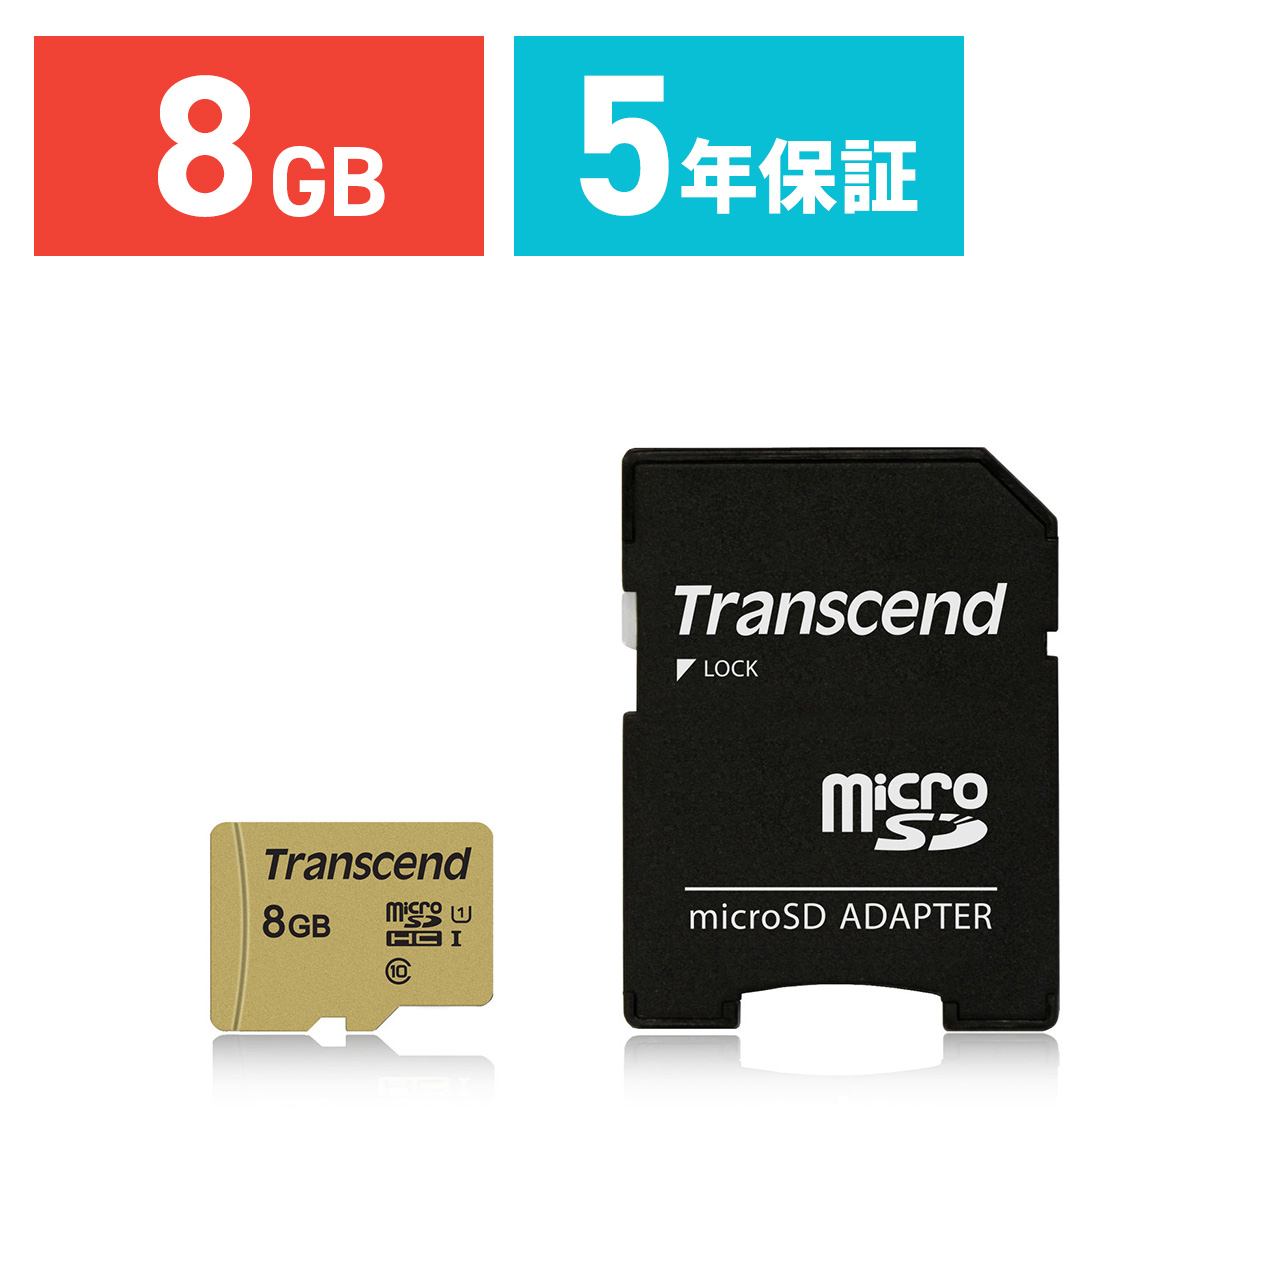 microSDHCJ[h 8GB Class10 UHS-I U1 Nintendo SwitchΉ Transcend TS8GUSD500S